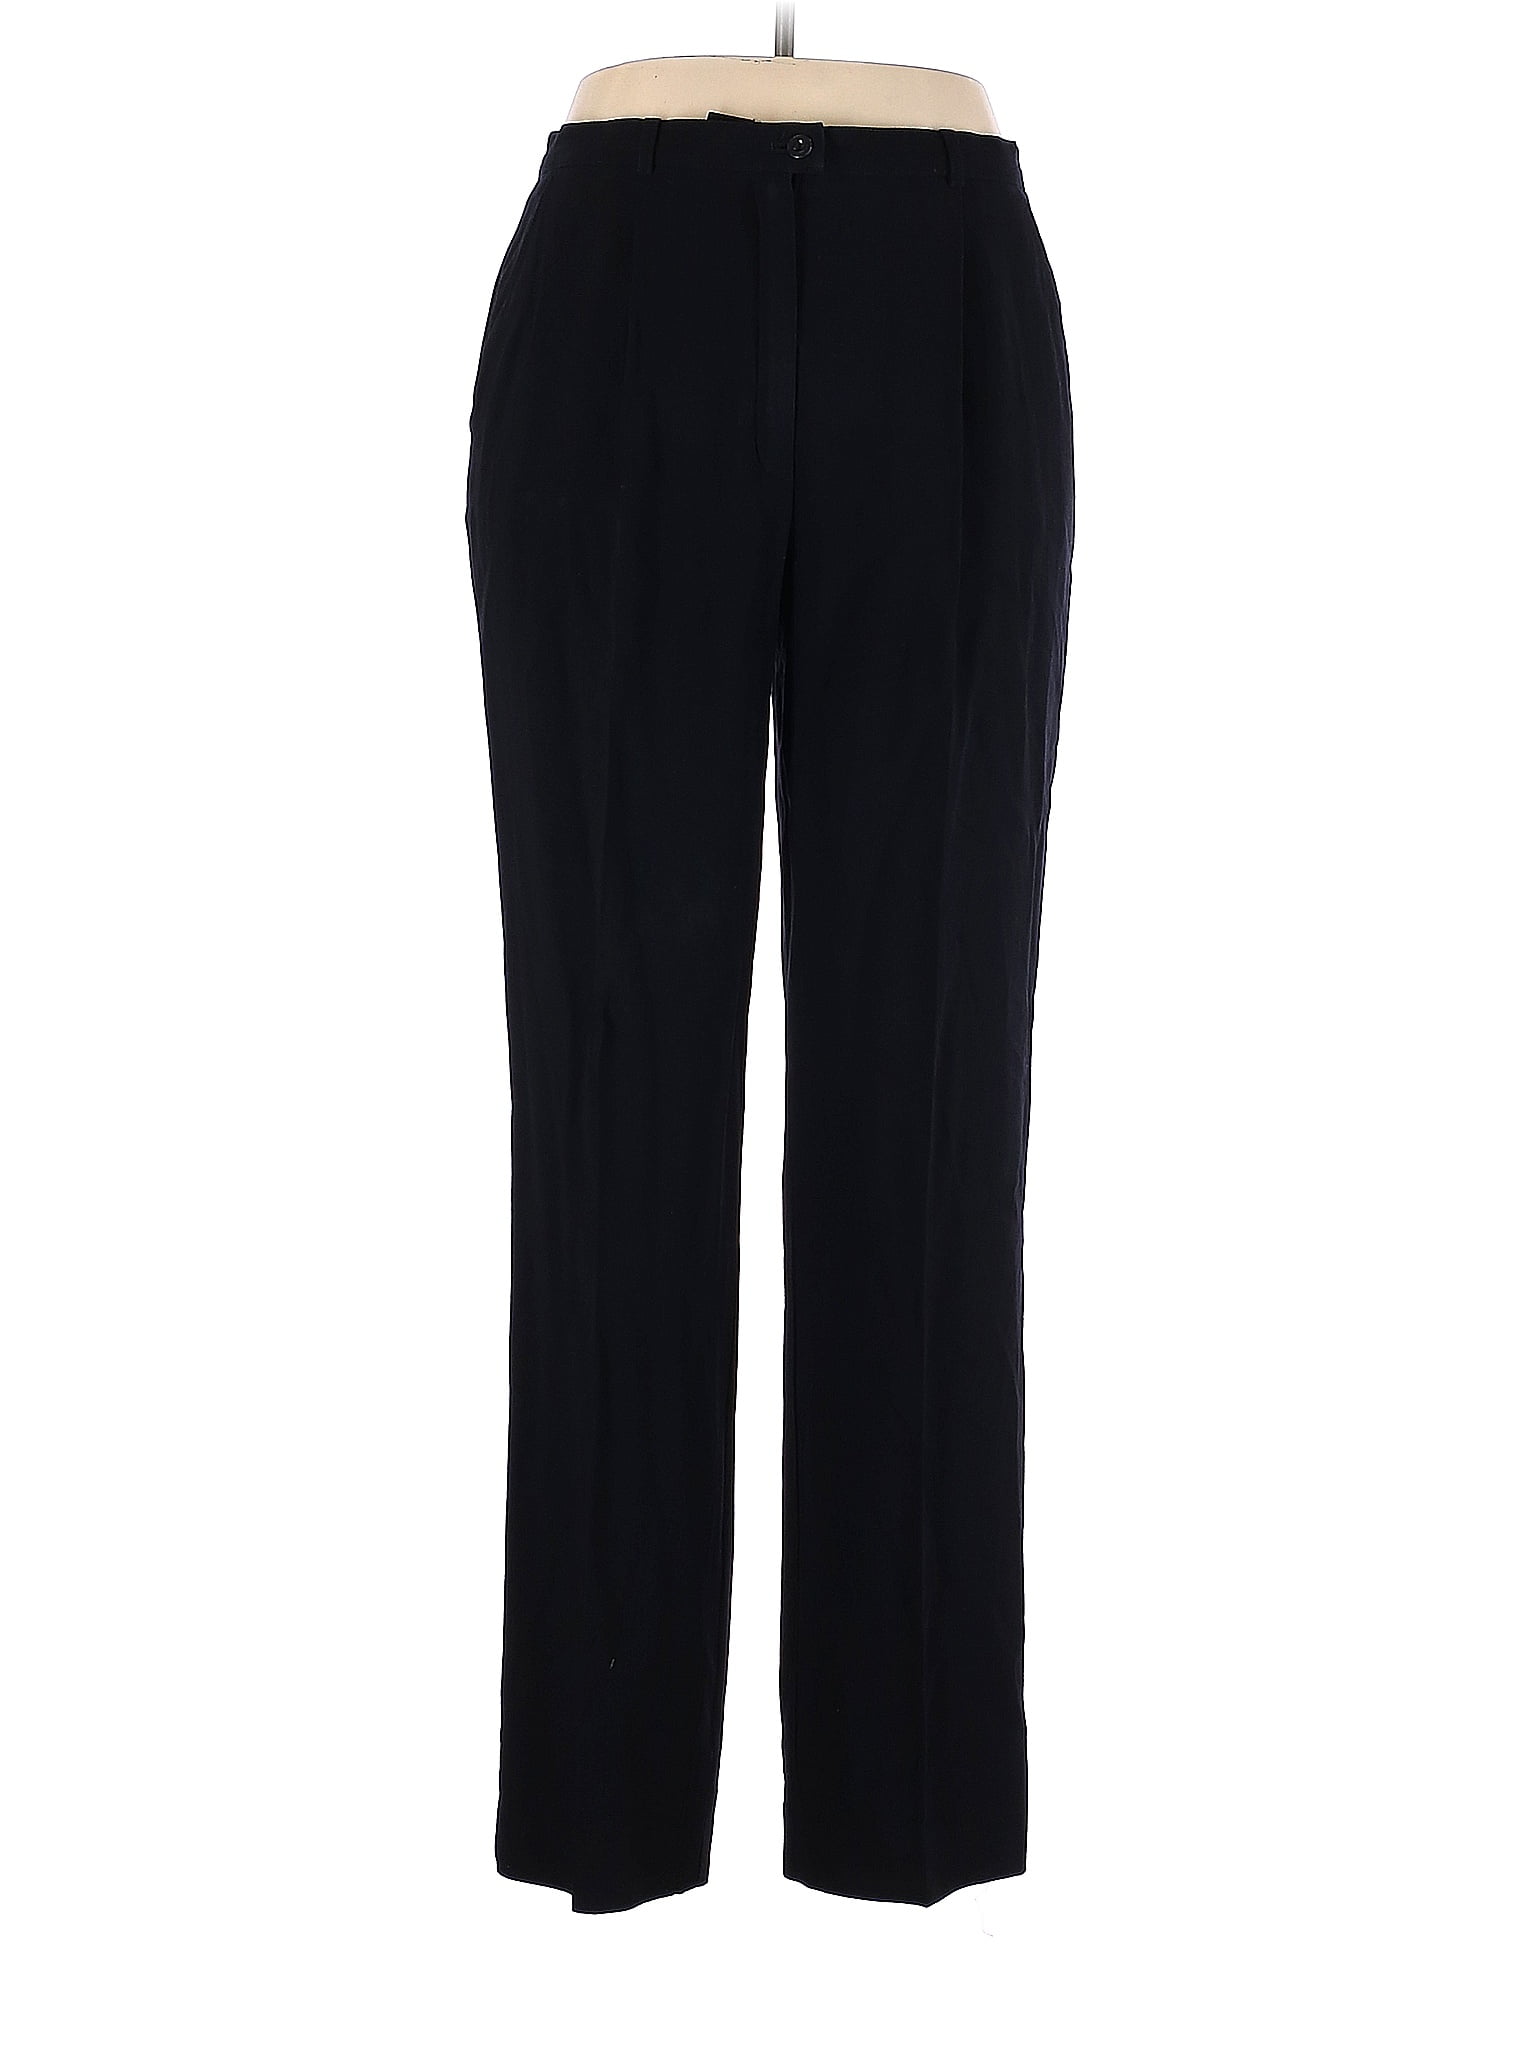 Escada 100% Wool Solid Black Wool Pants Size 44 (EU) - 89% off | thredUP